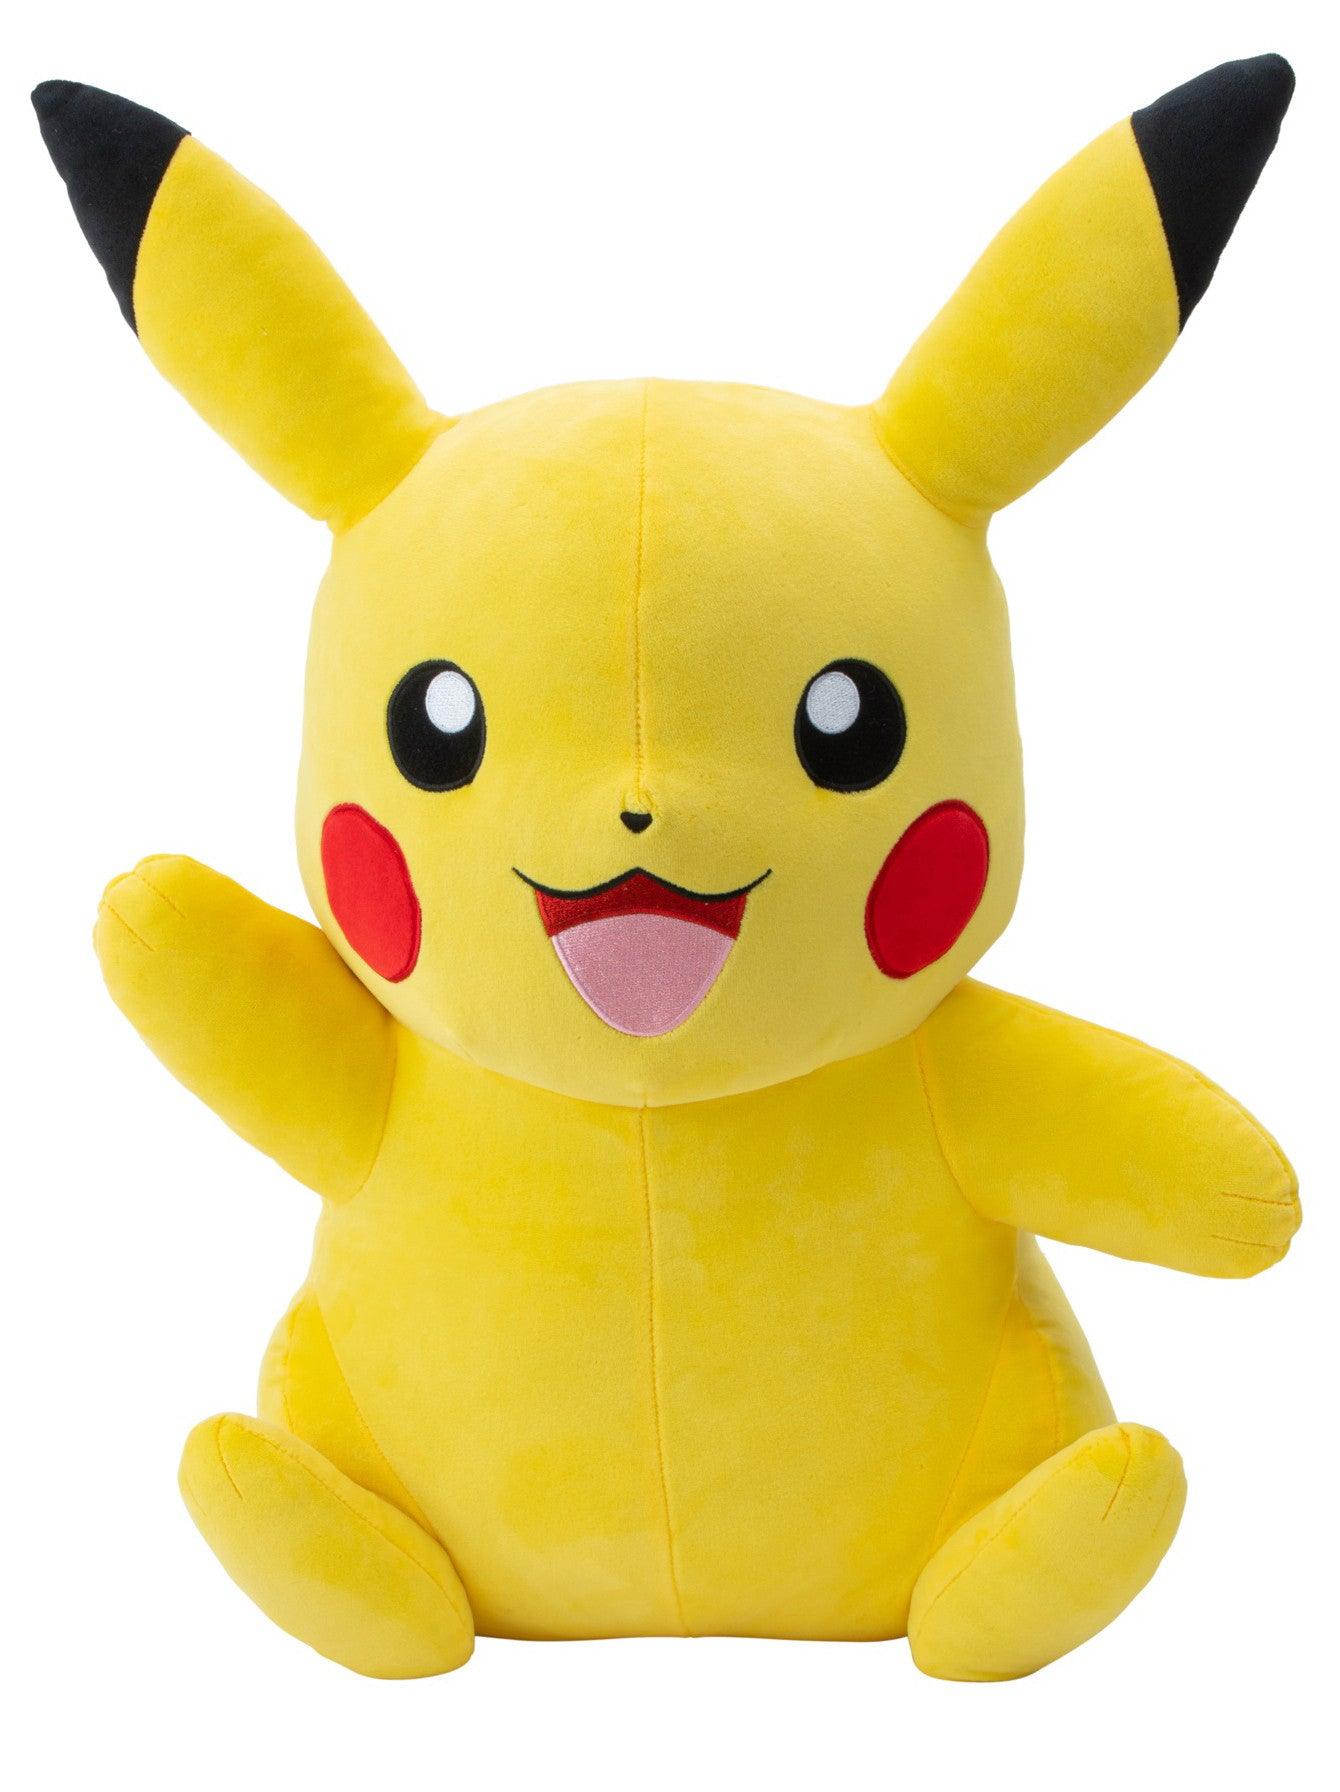 Pokemon Plush Pikachu (New Pose) 24"